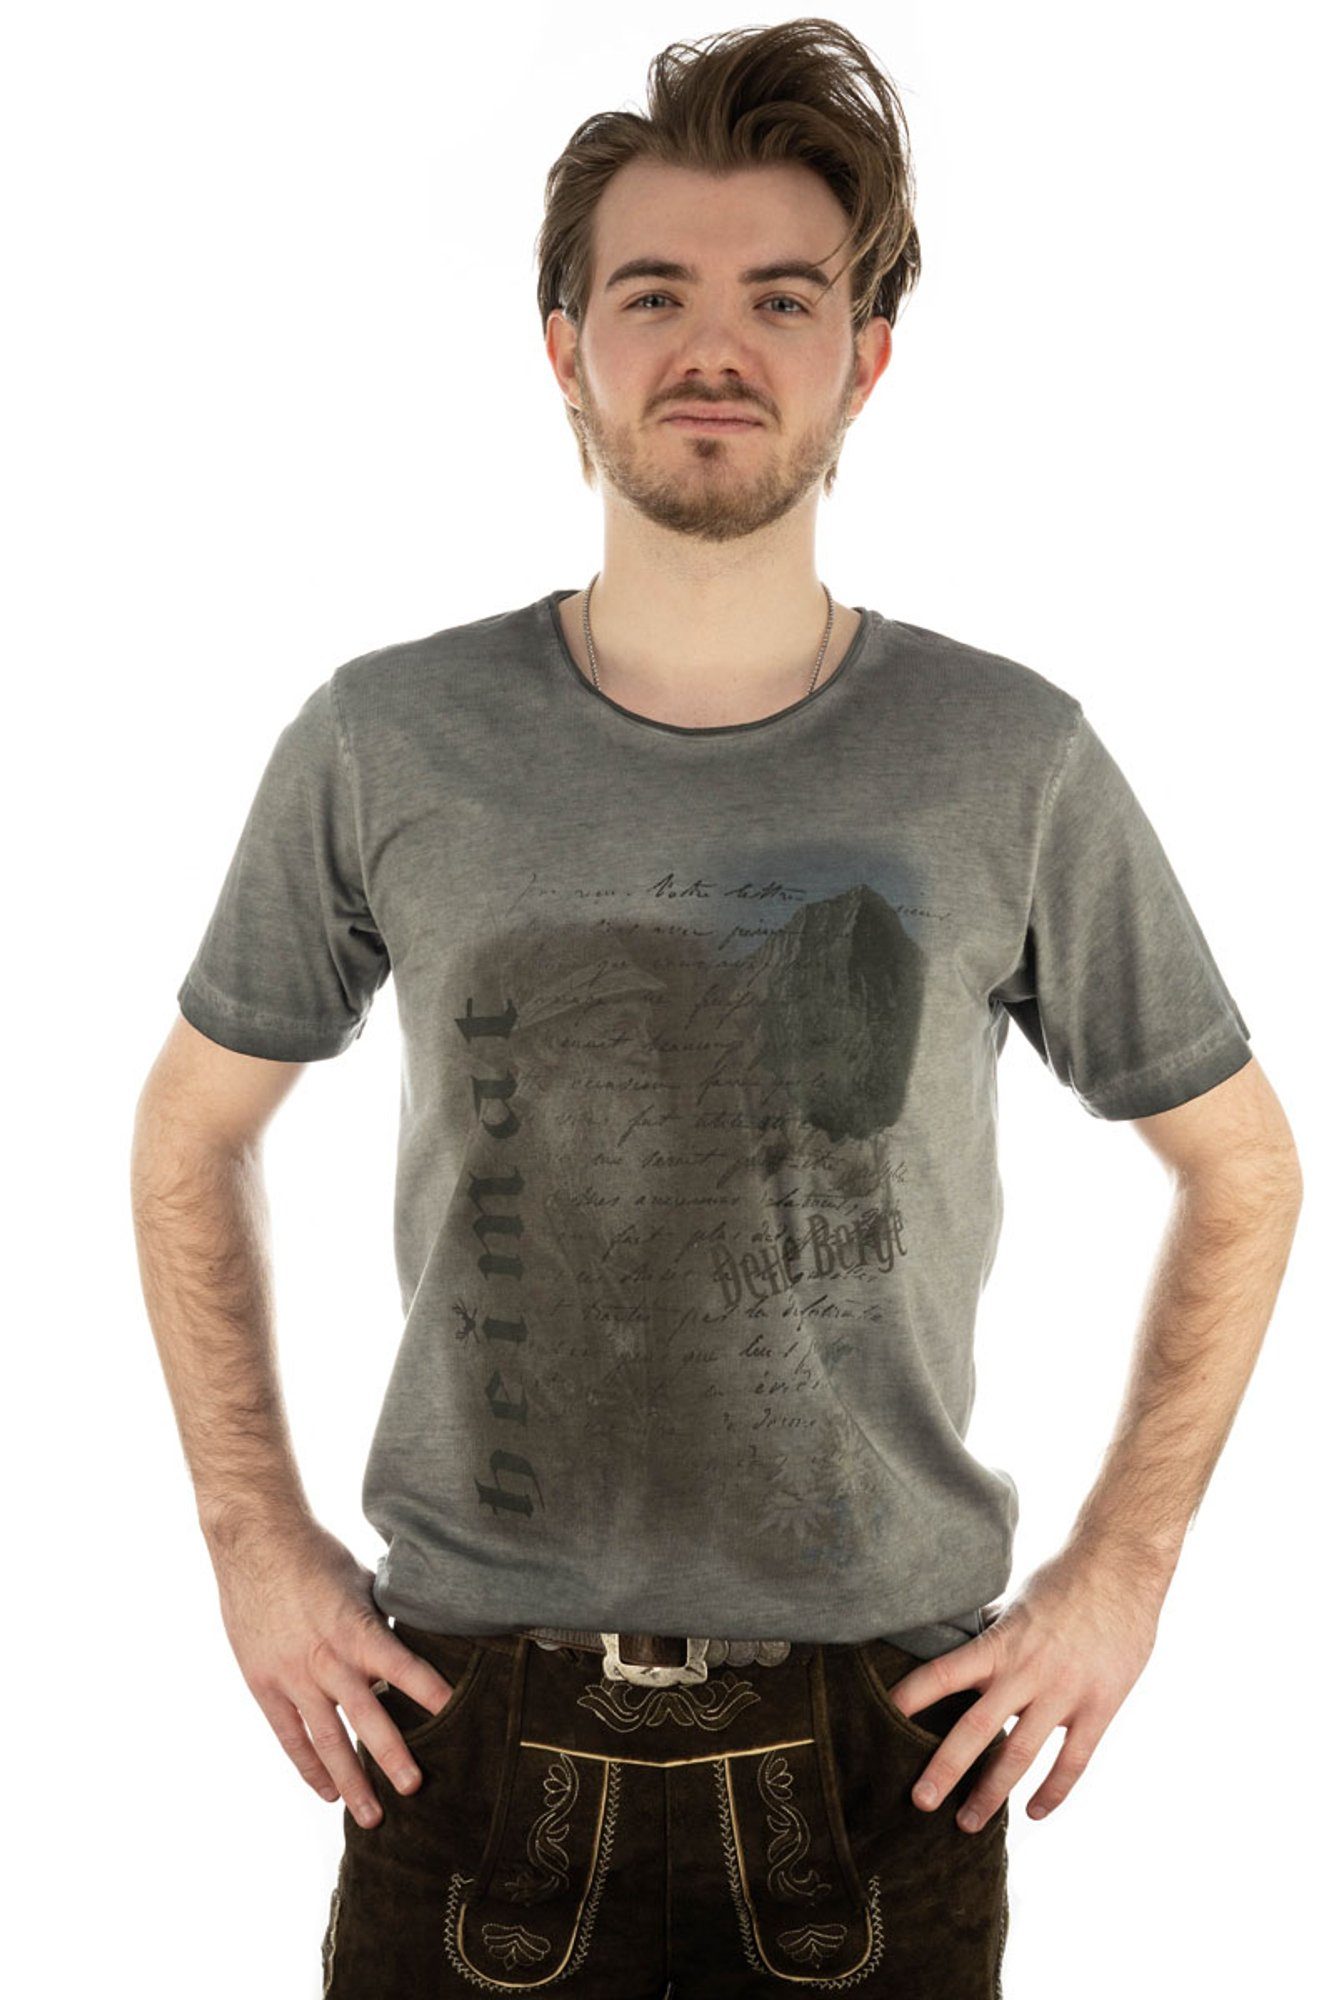 OS-Trachten Trachtenshirt Praiol Kurzarm T-Shirt mit Motivdruck anthrazit | Trachtenshirts